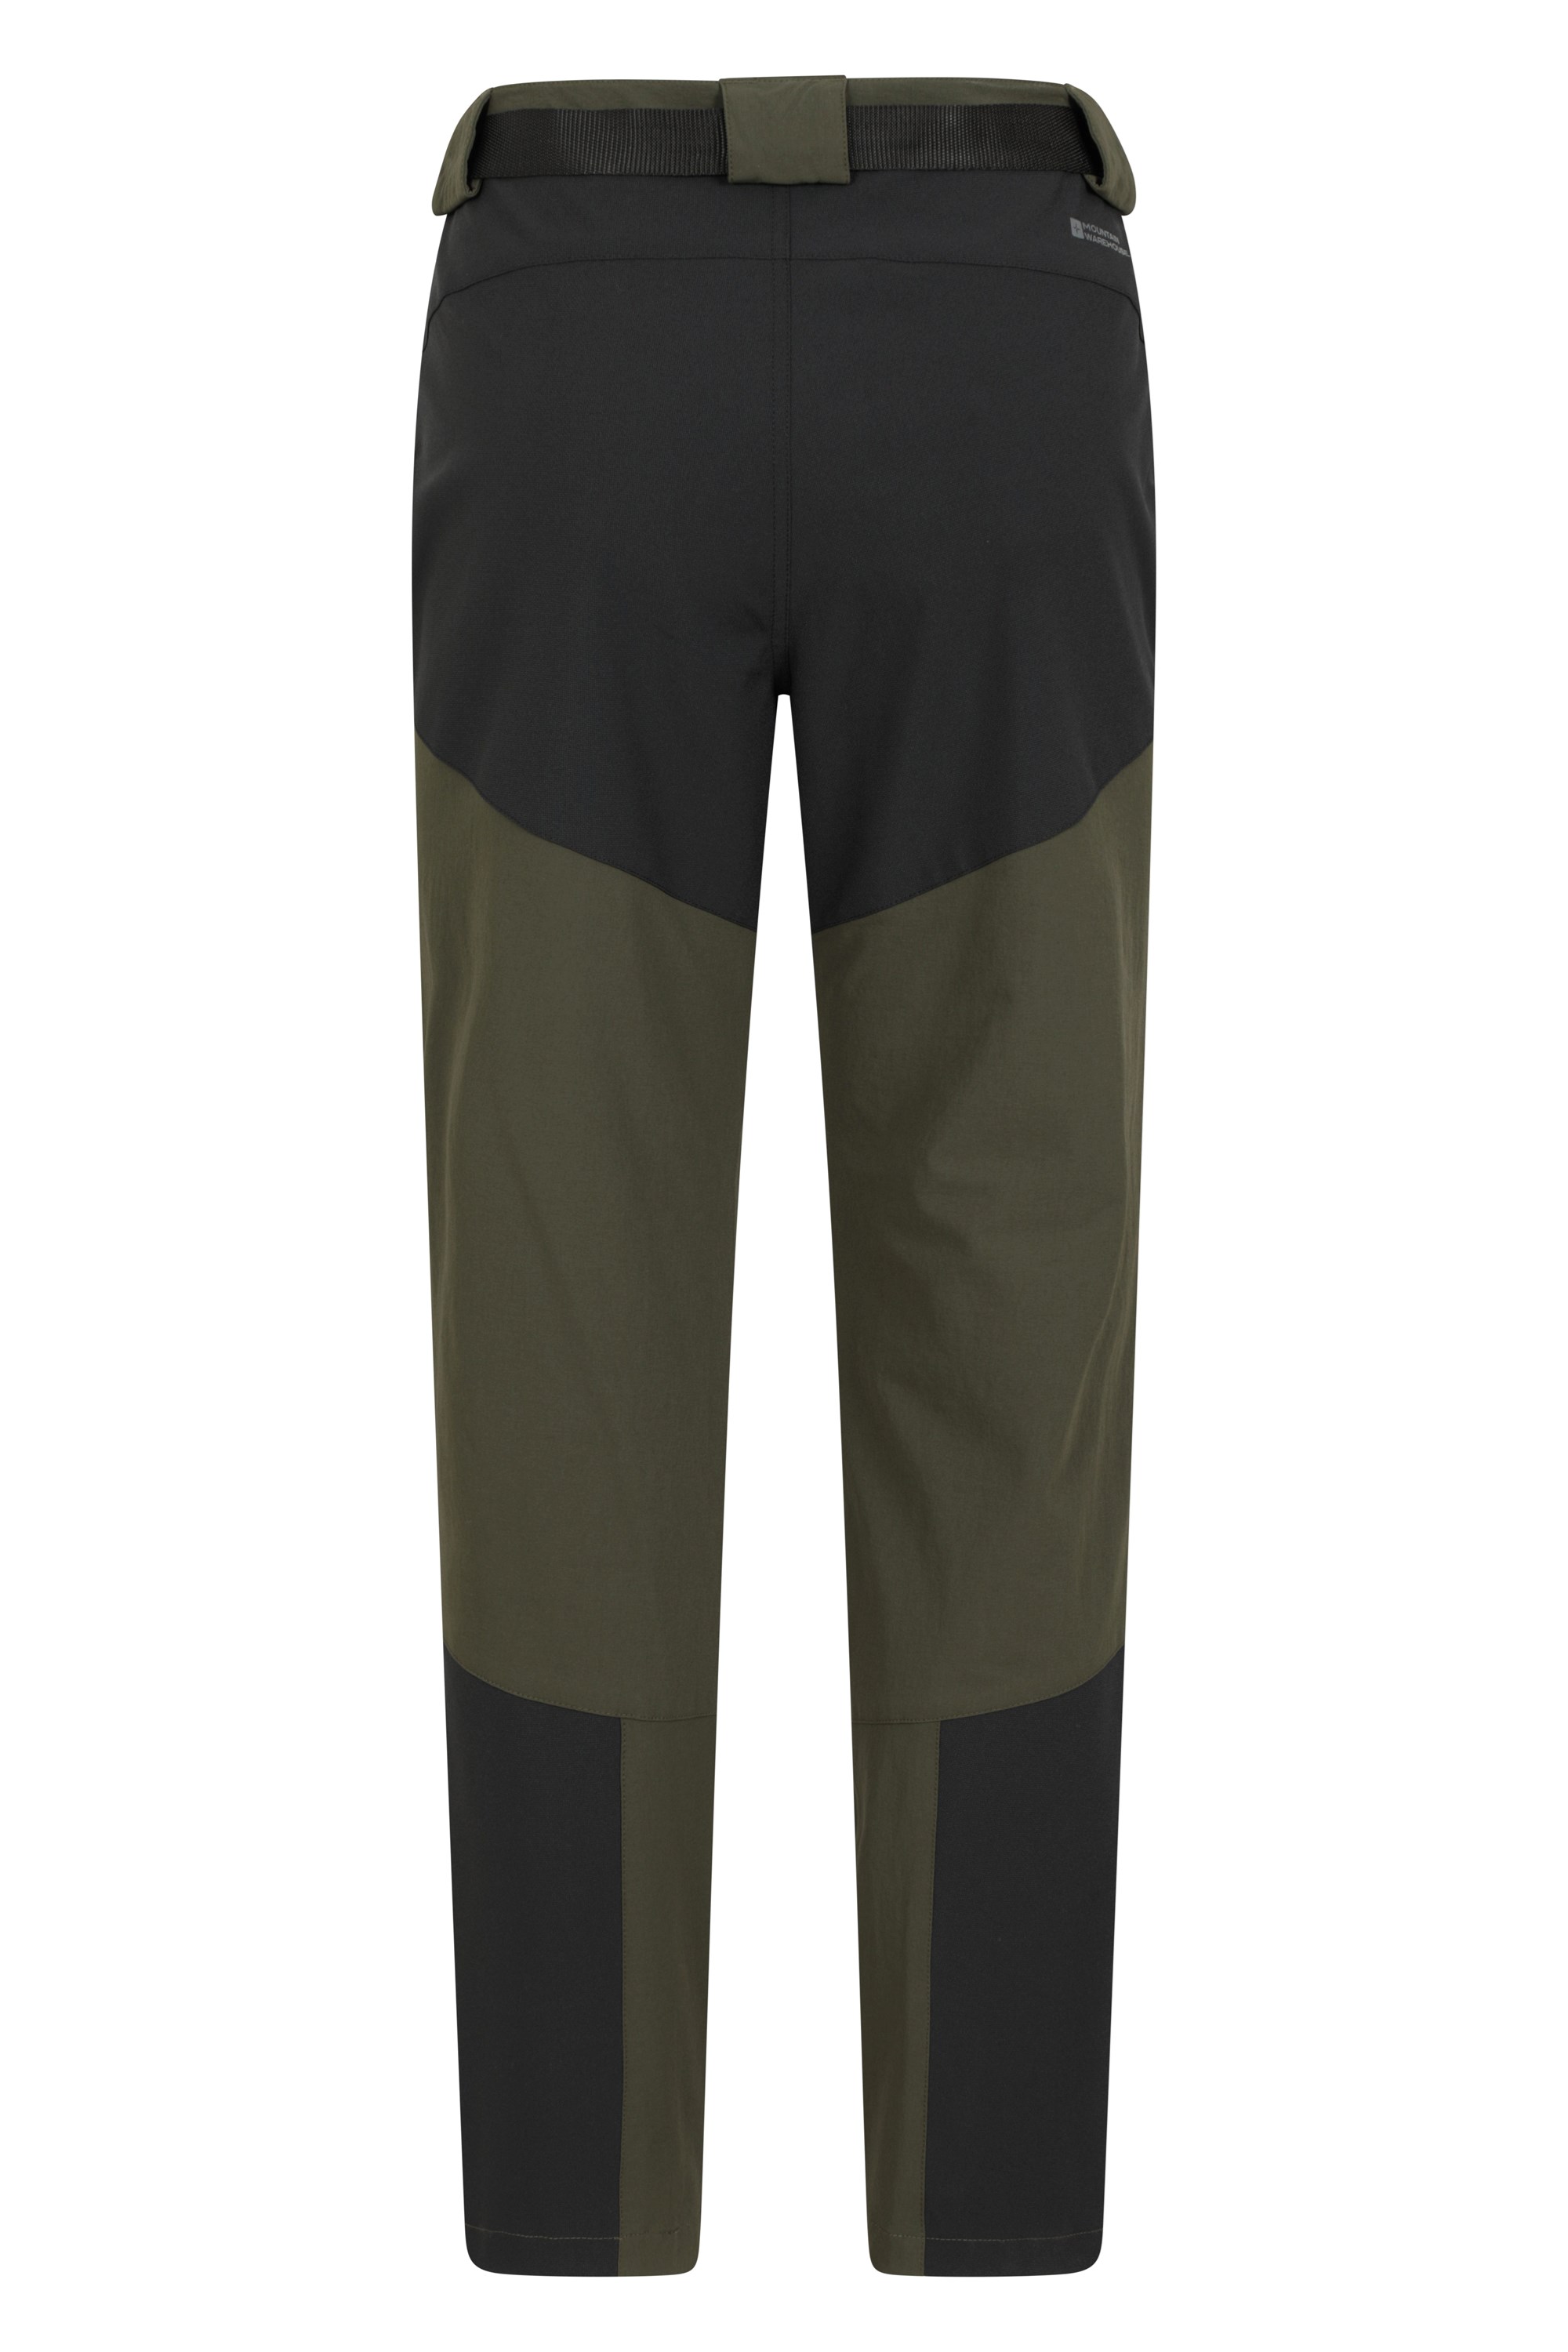 Karrimor Mens Sierra Pant Waterproof Trousers Pants Bottoms Windproof  Breathable Black XS : Amazon.co.uk: Fashion